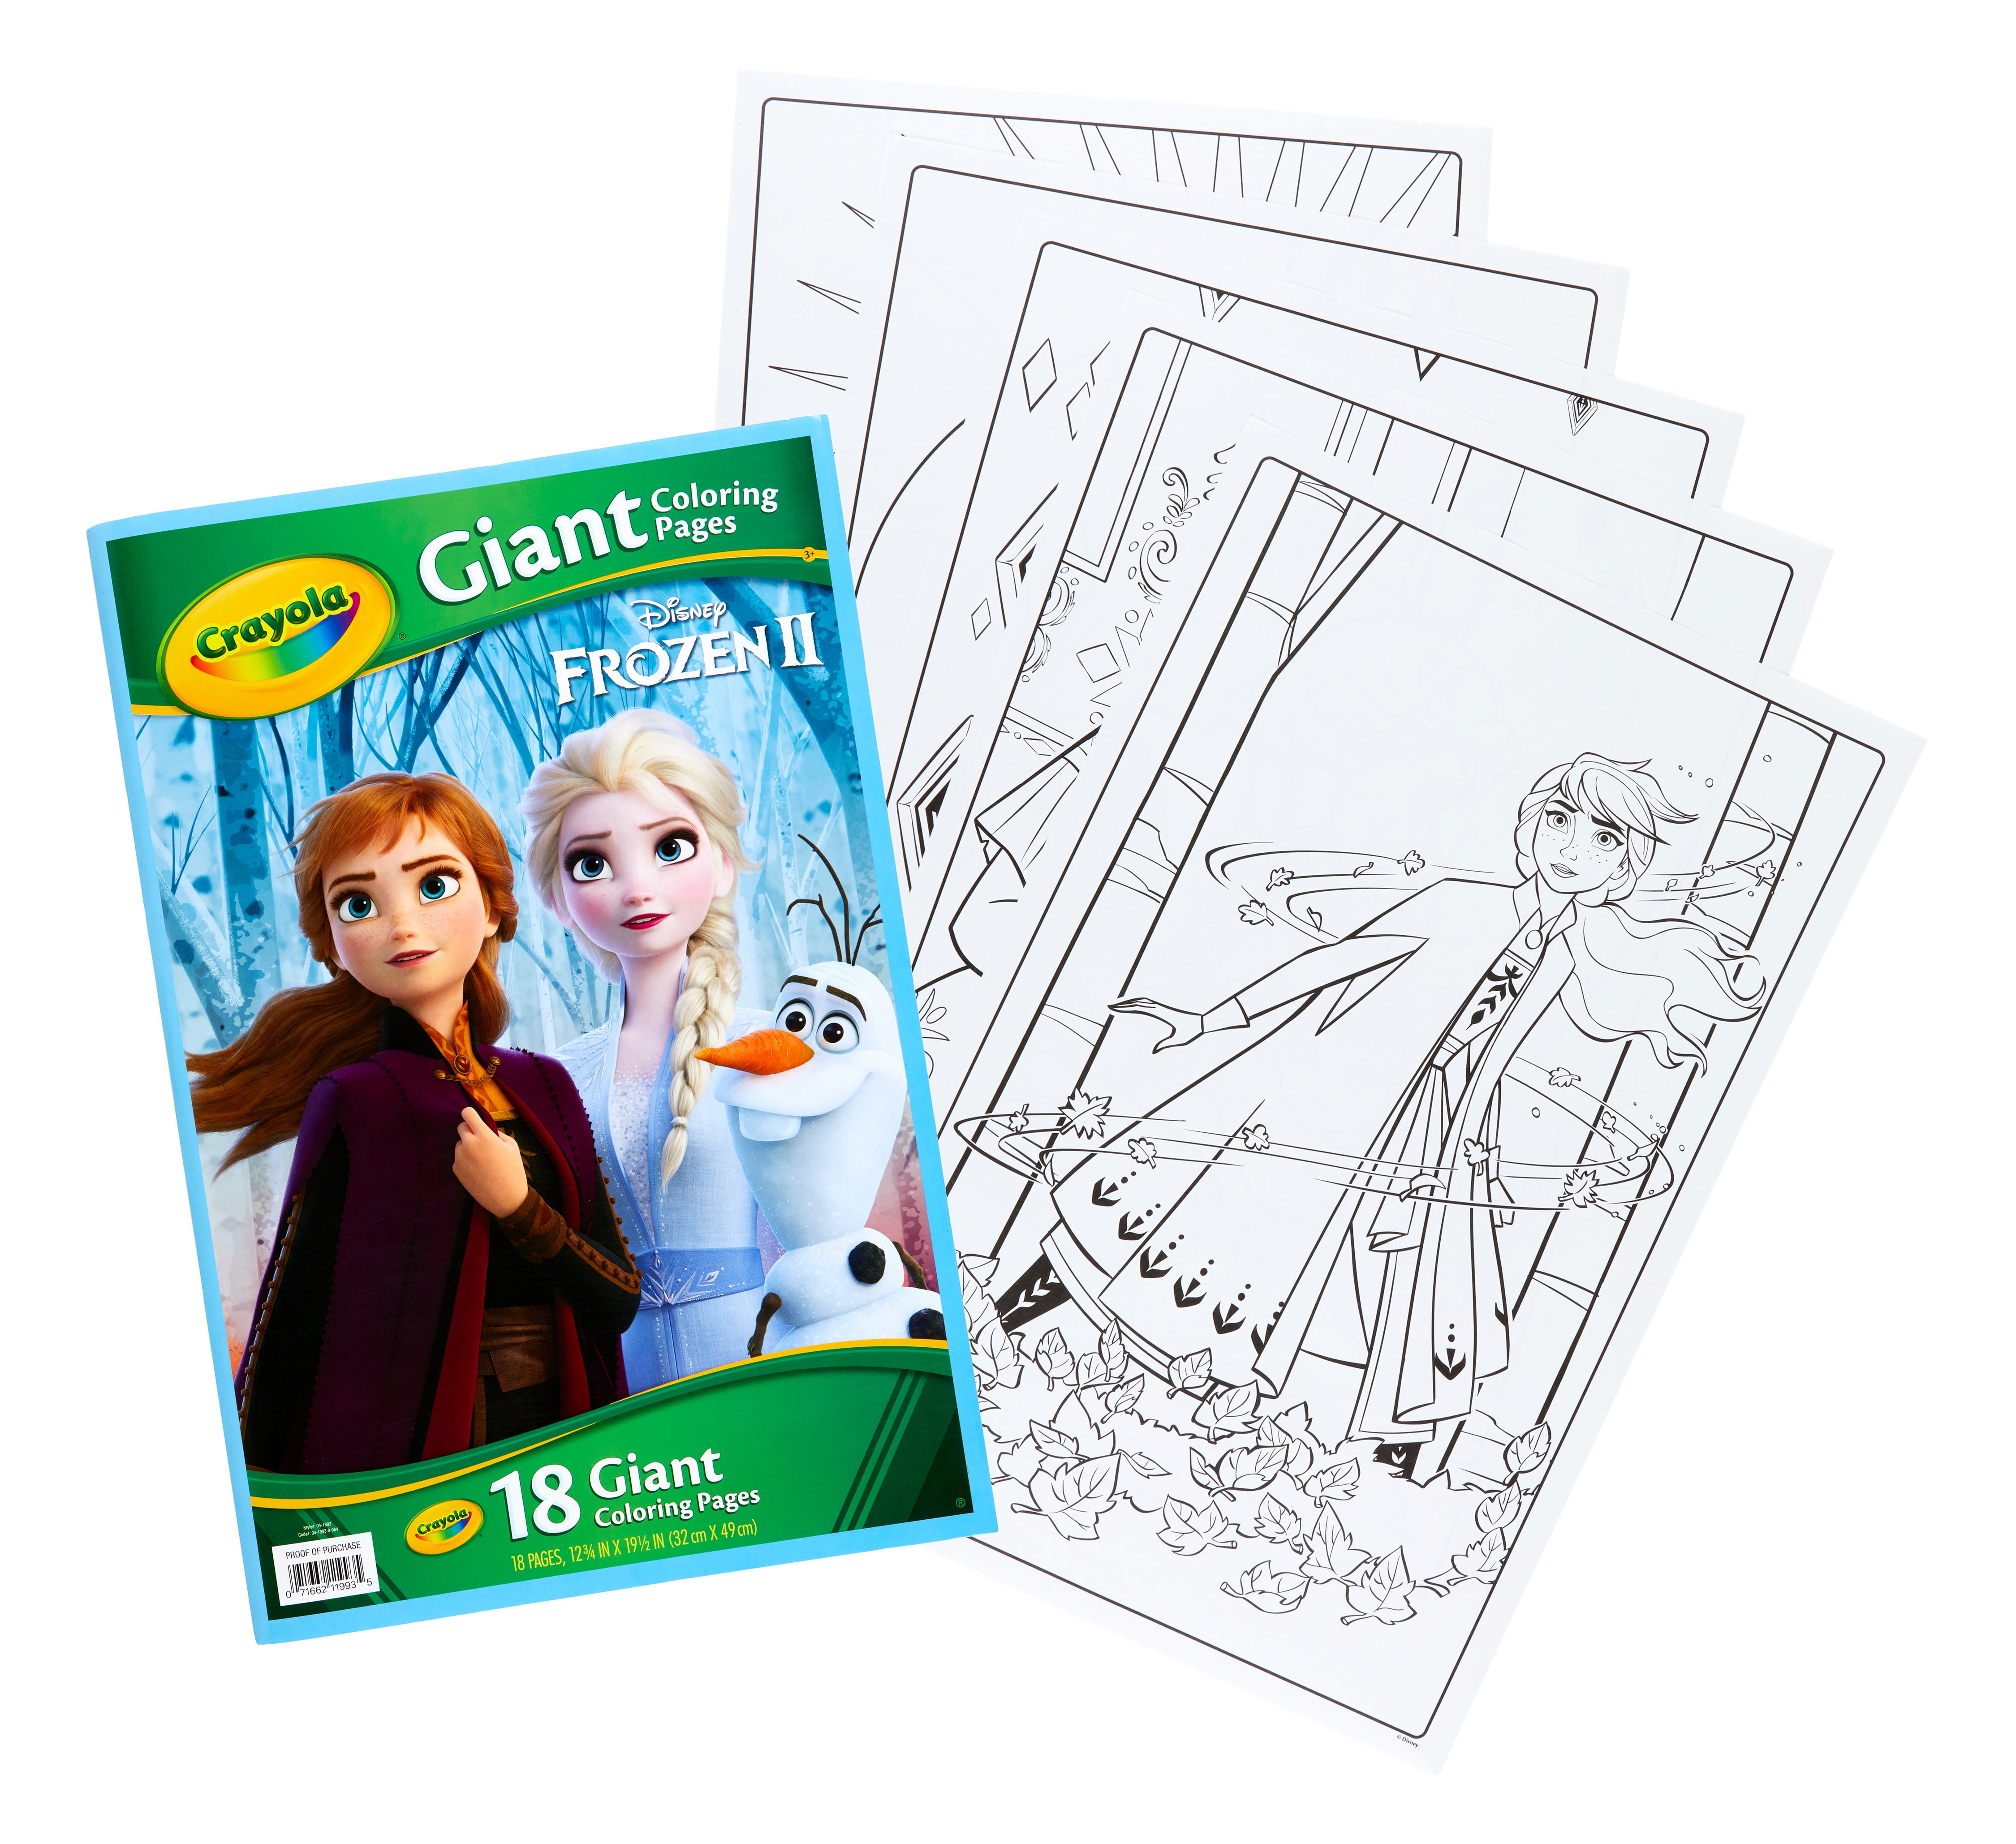 Crayola Giant Disney Coloring Book 12.75X19-7/16 18pg-Frozen